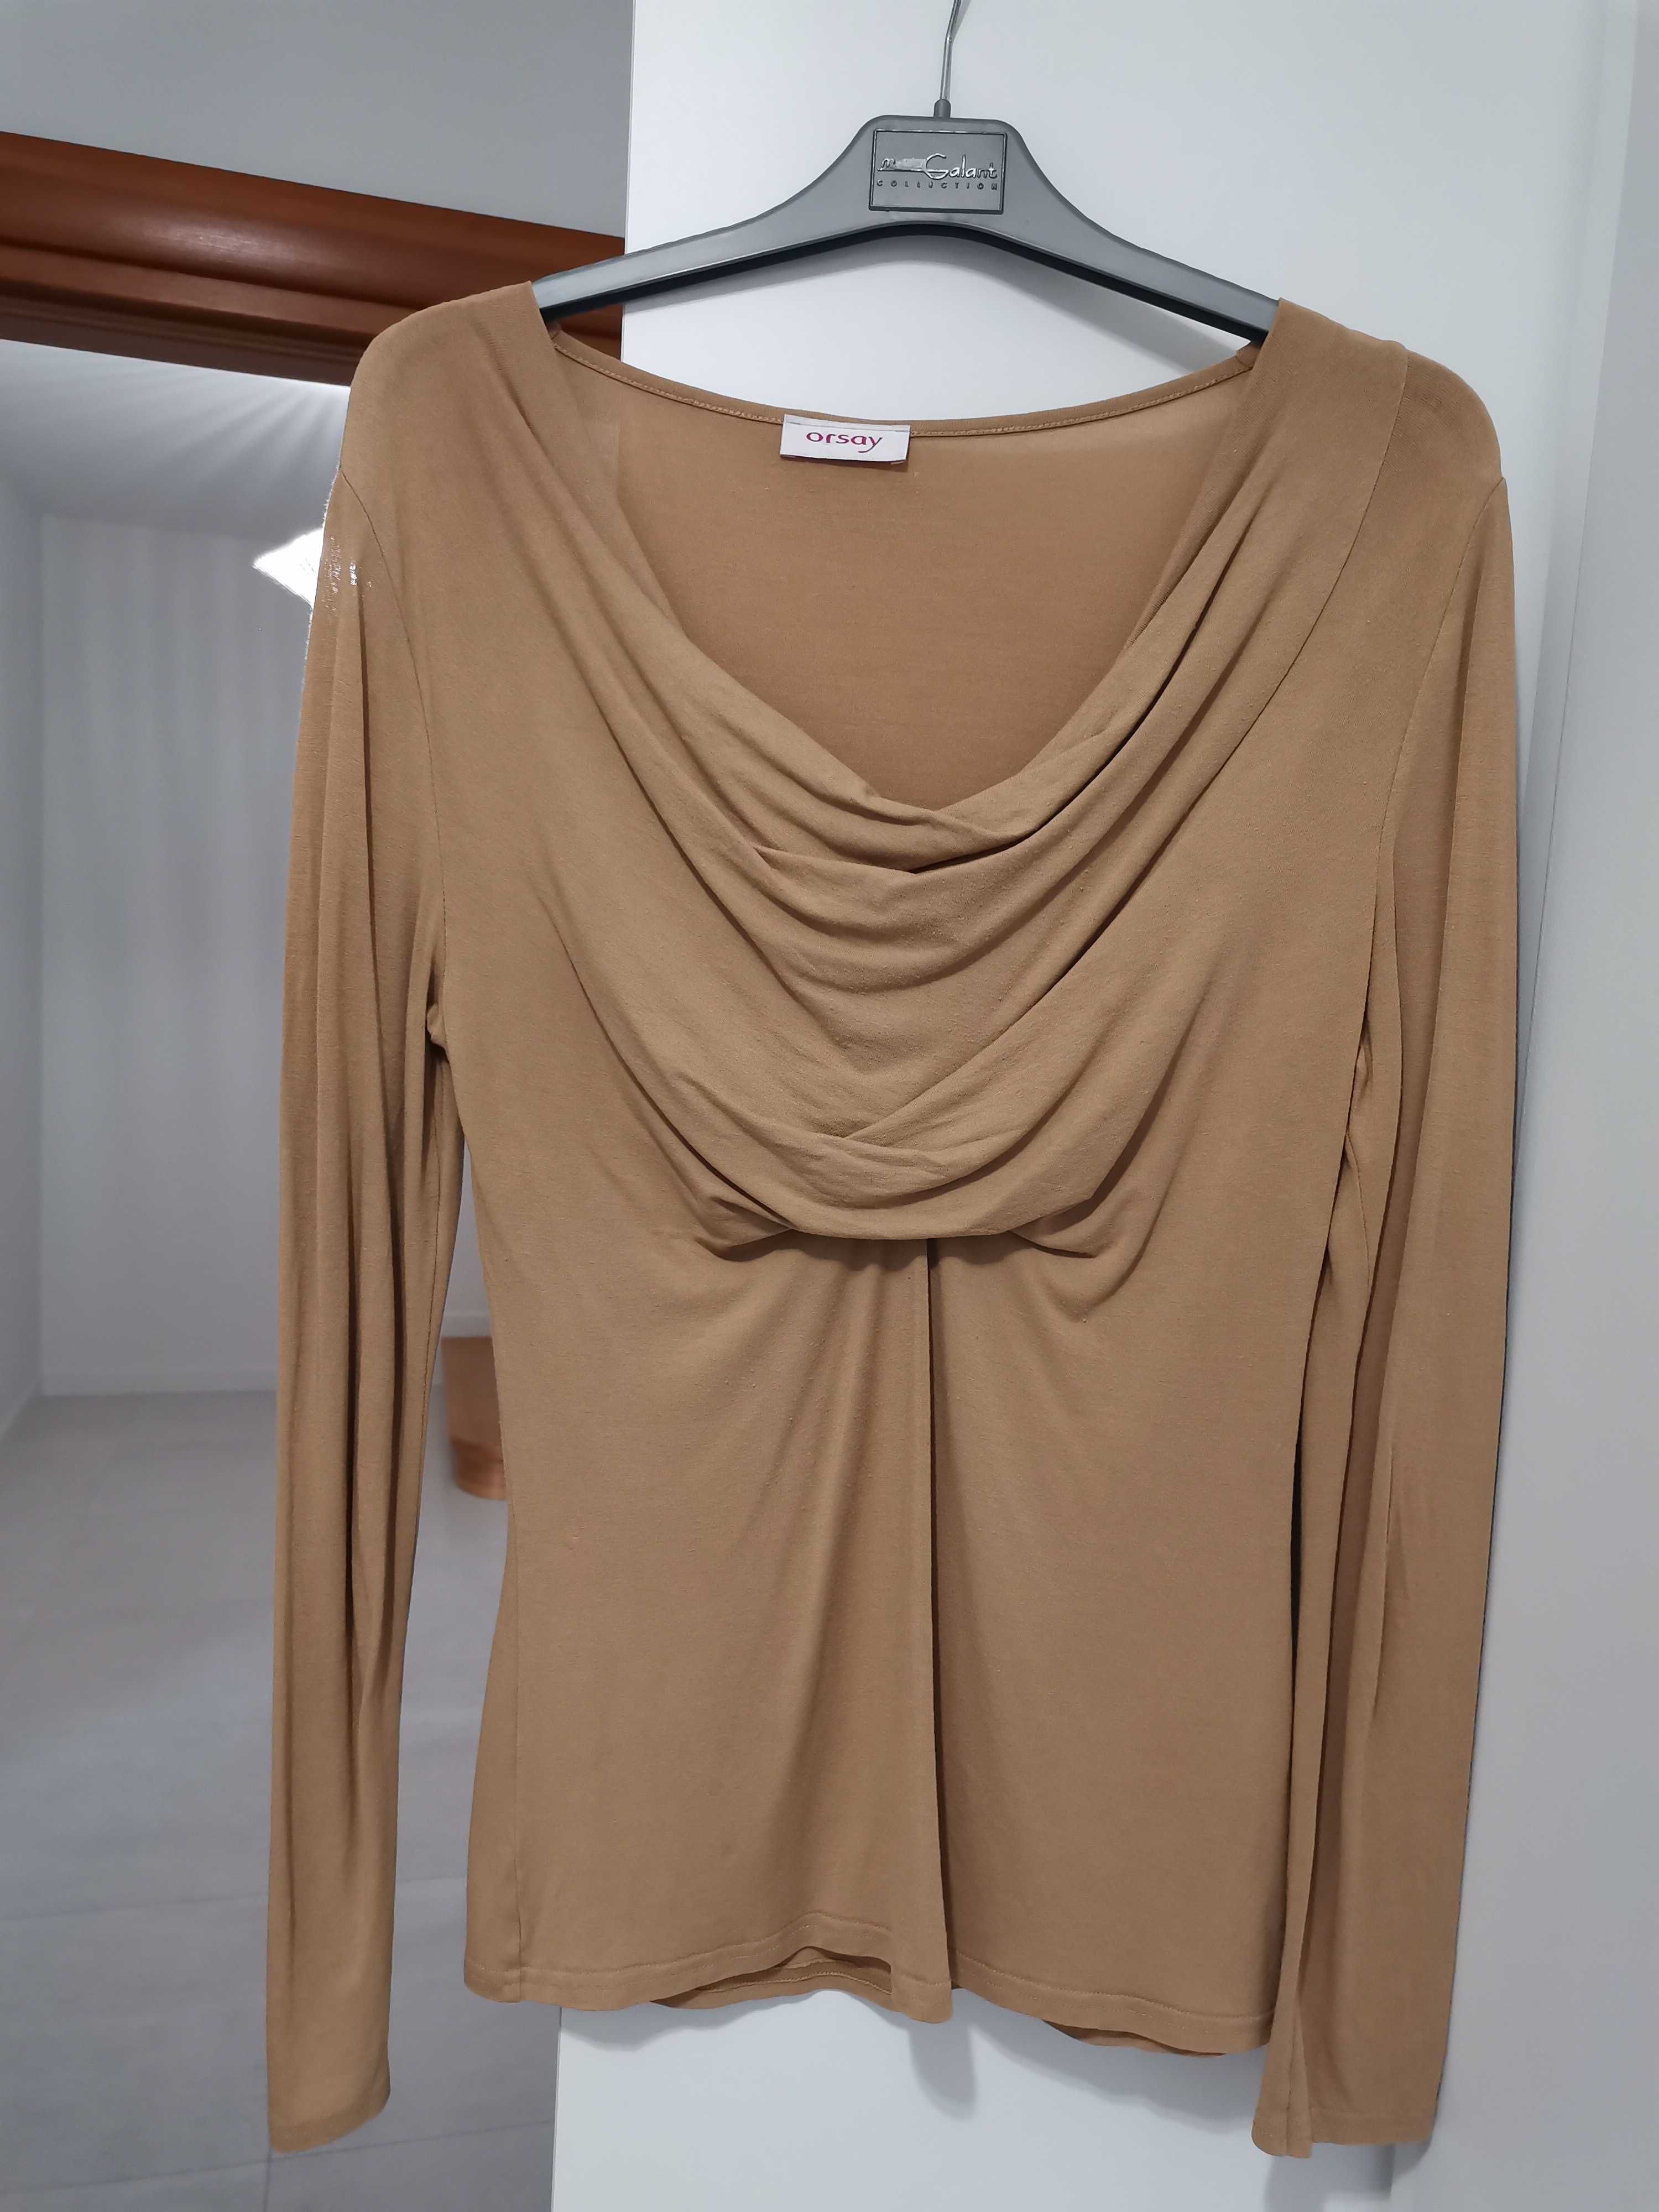 Bluzka damska marki Orsay rozmiar 36